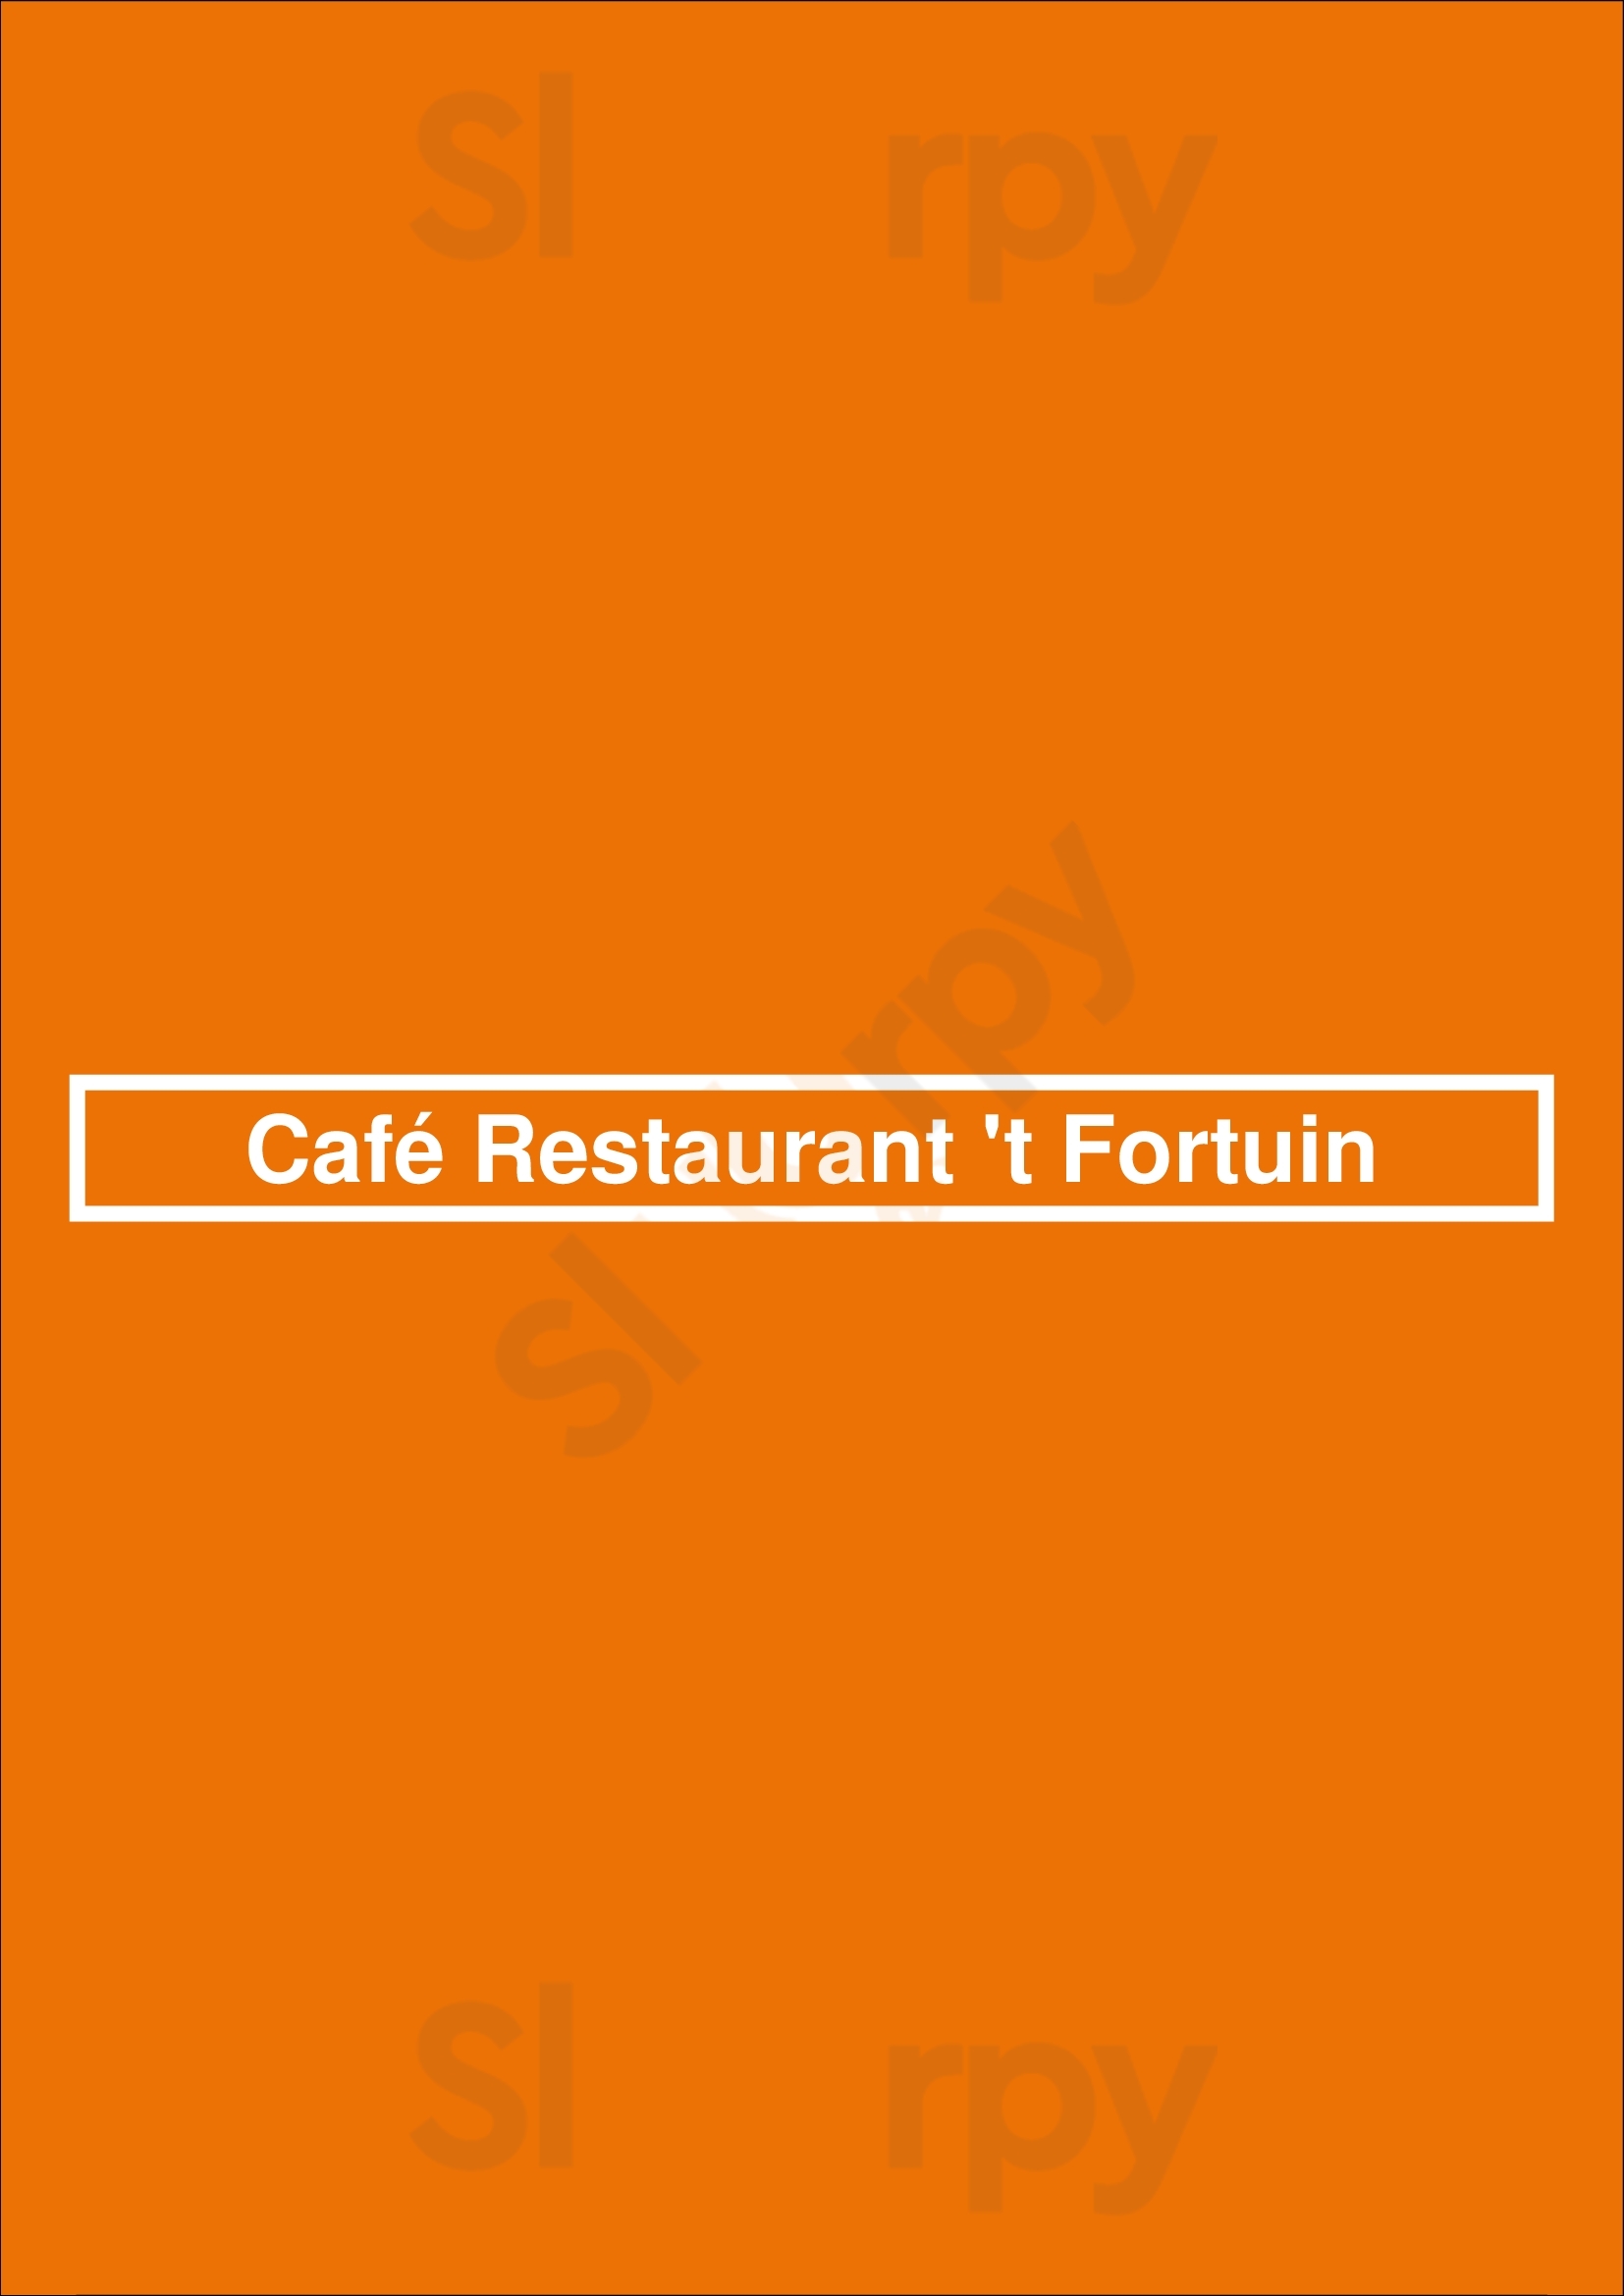 Café Restaurant 't Fortuin Wervershoof Menu - 1